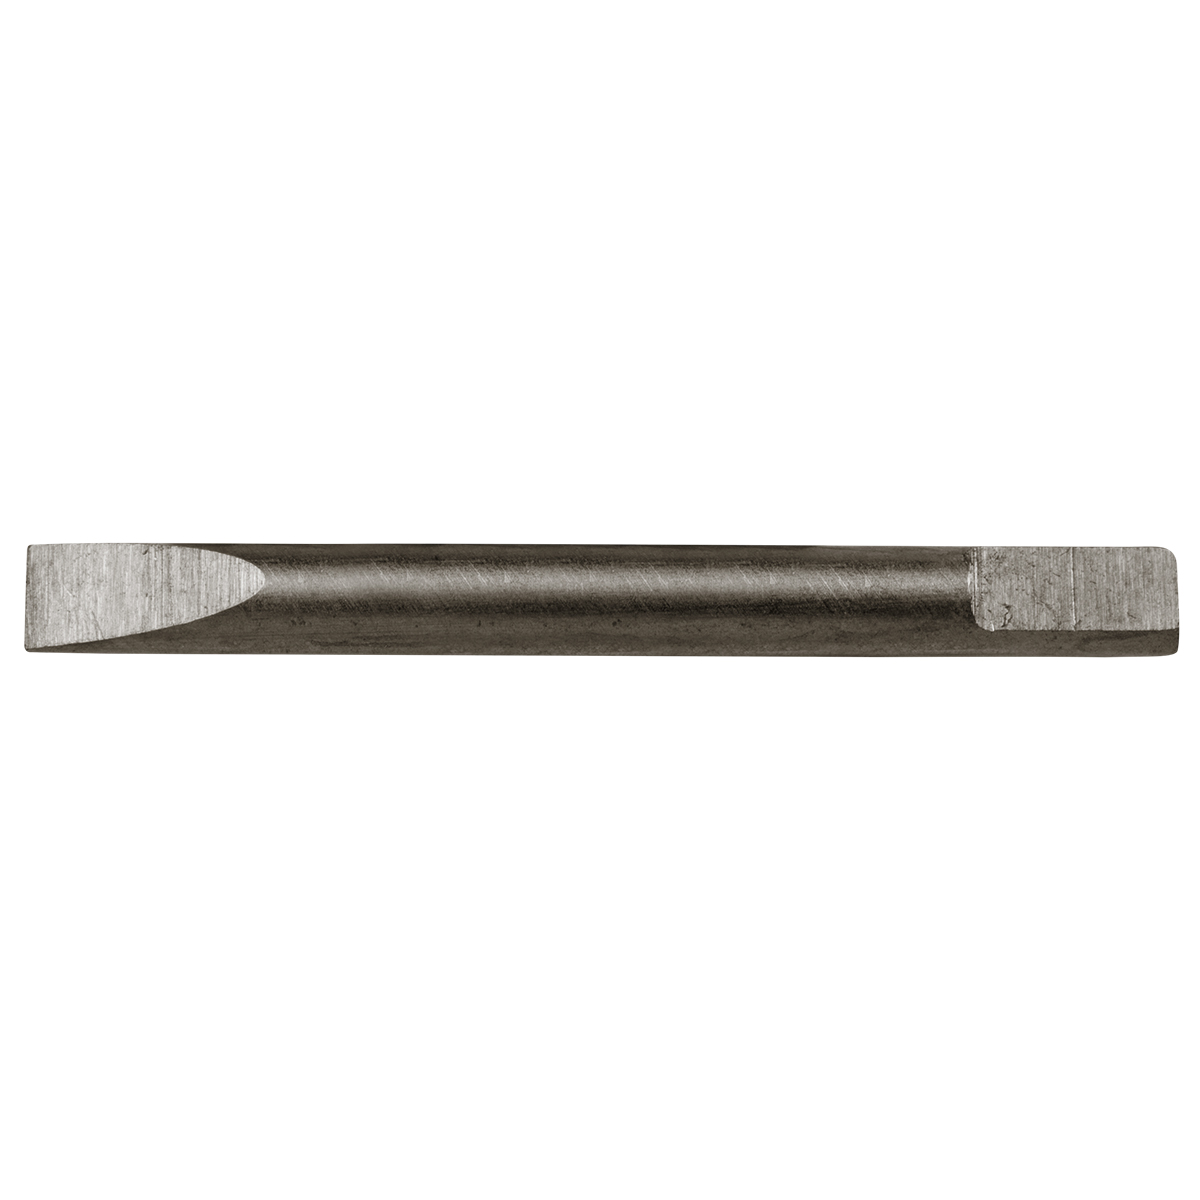 4 Blades for Ergo screwdriver, slot, 2,00 mm, standard taper, green, stainless steel